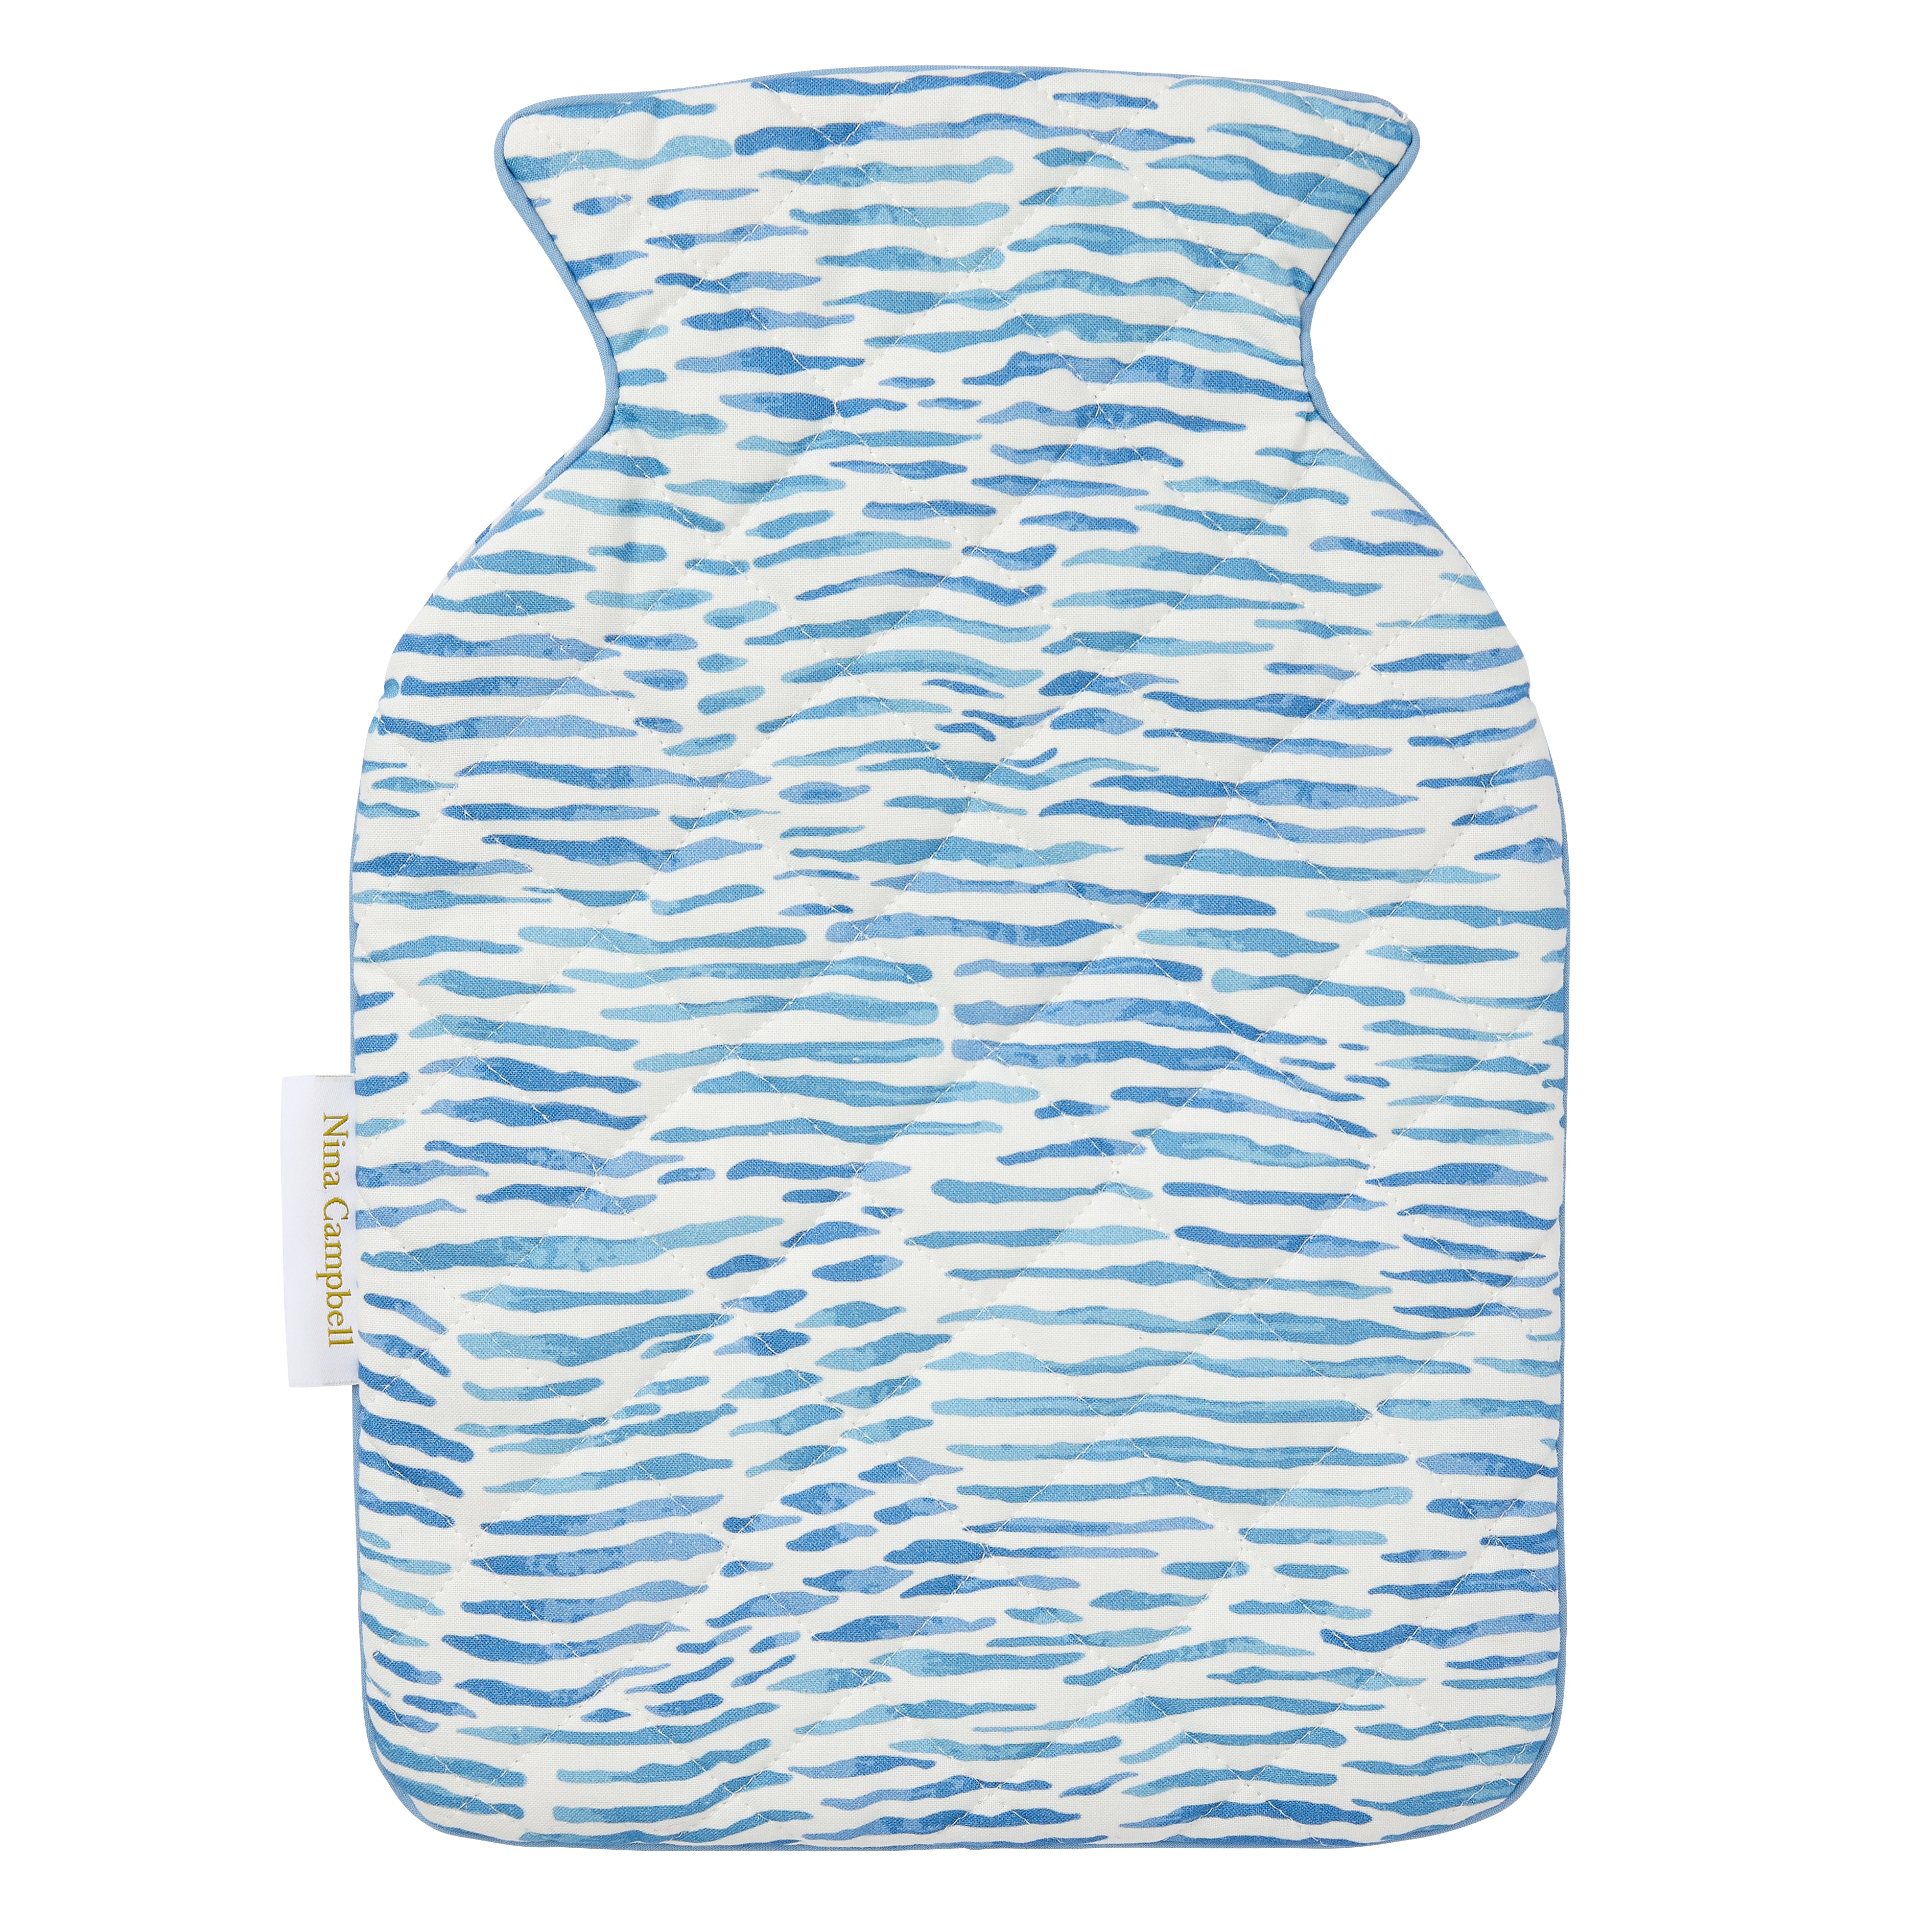 Hot Water Bottle Cover - Arles Blue